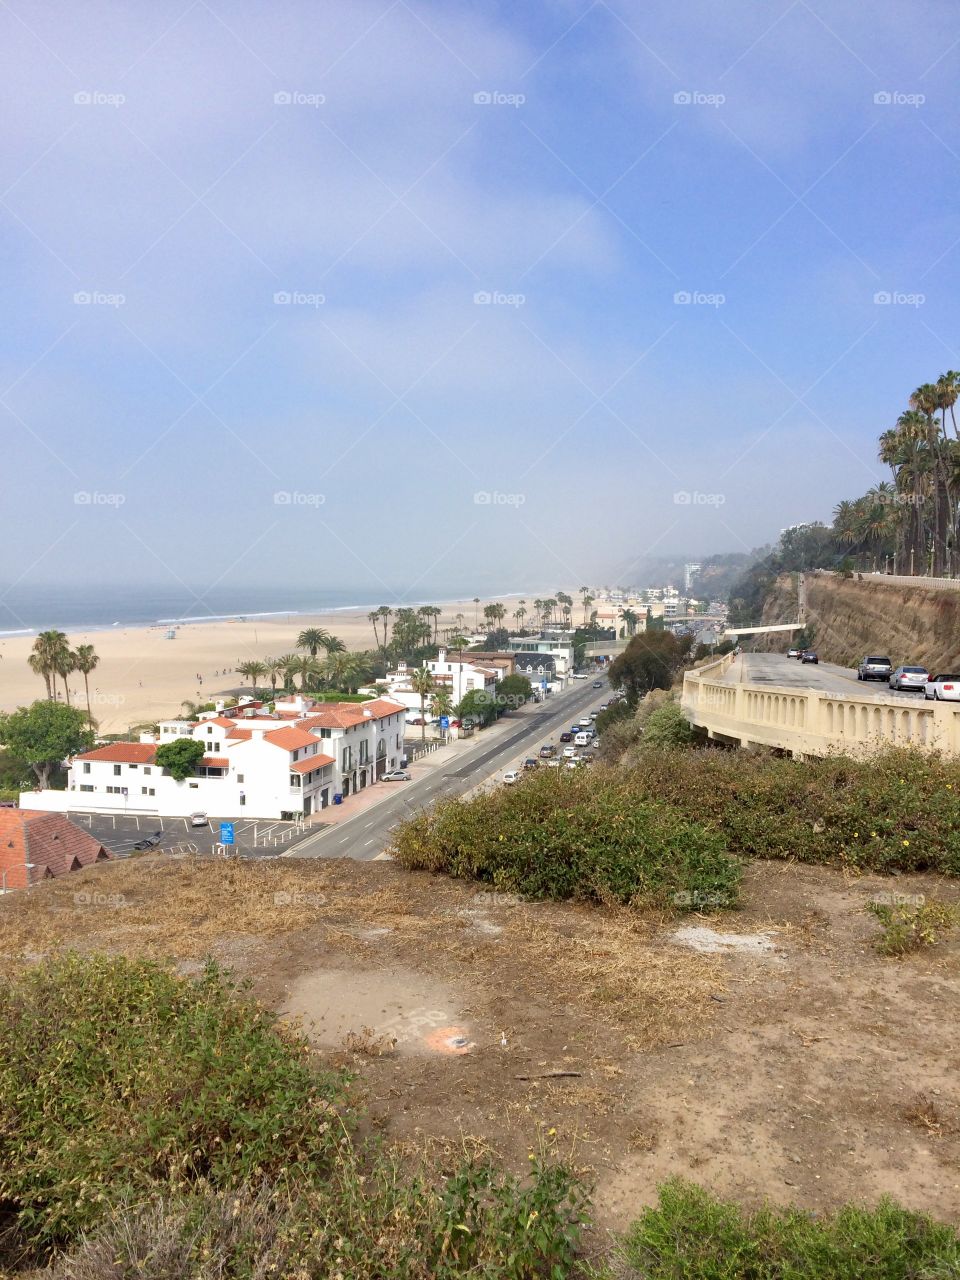 Jaw dropping shoreline of Santa Monica Beach